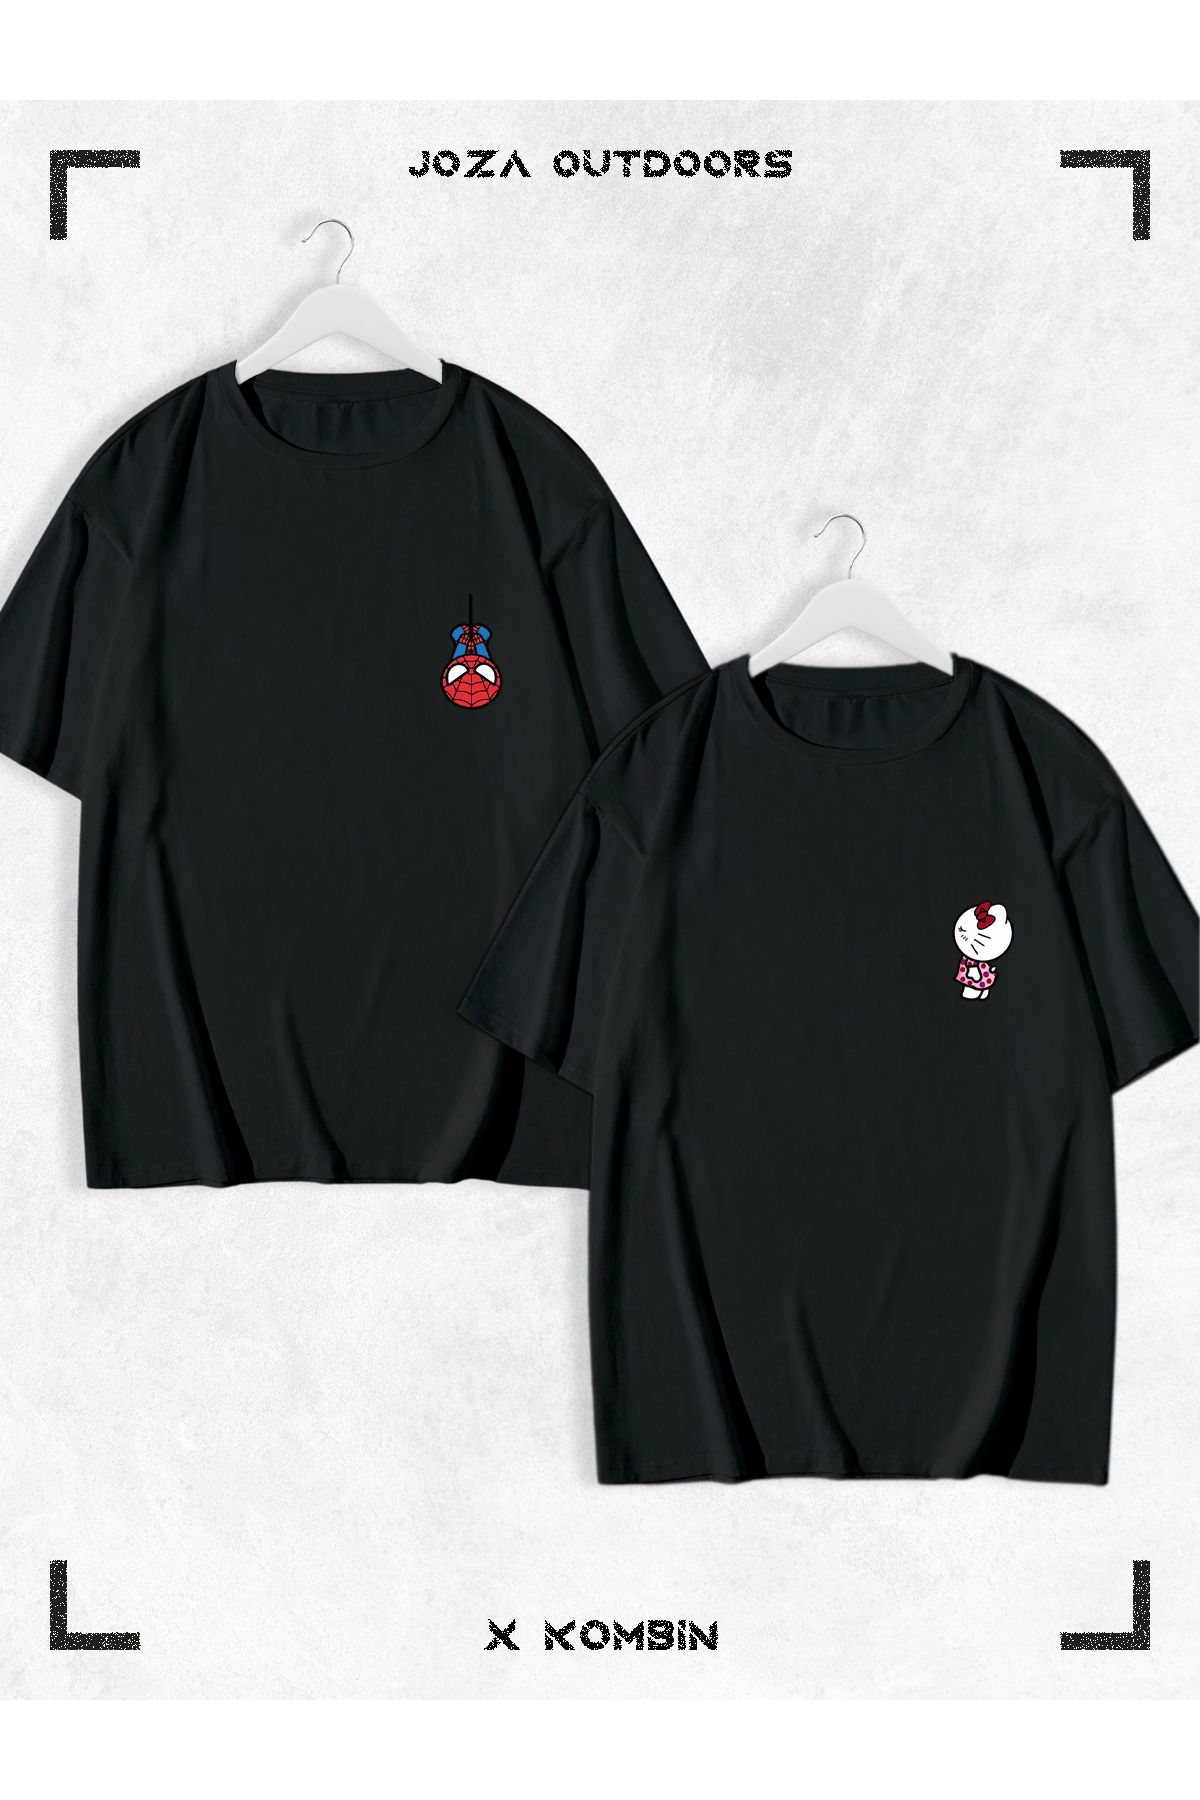 Joza Outdoors Kadın Erkek Unisex Hello Kitty Spiderman Sevgili Çift Kombini Oversize Renkli Tshirt 2'li Takım